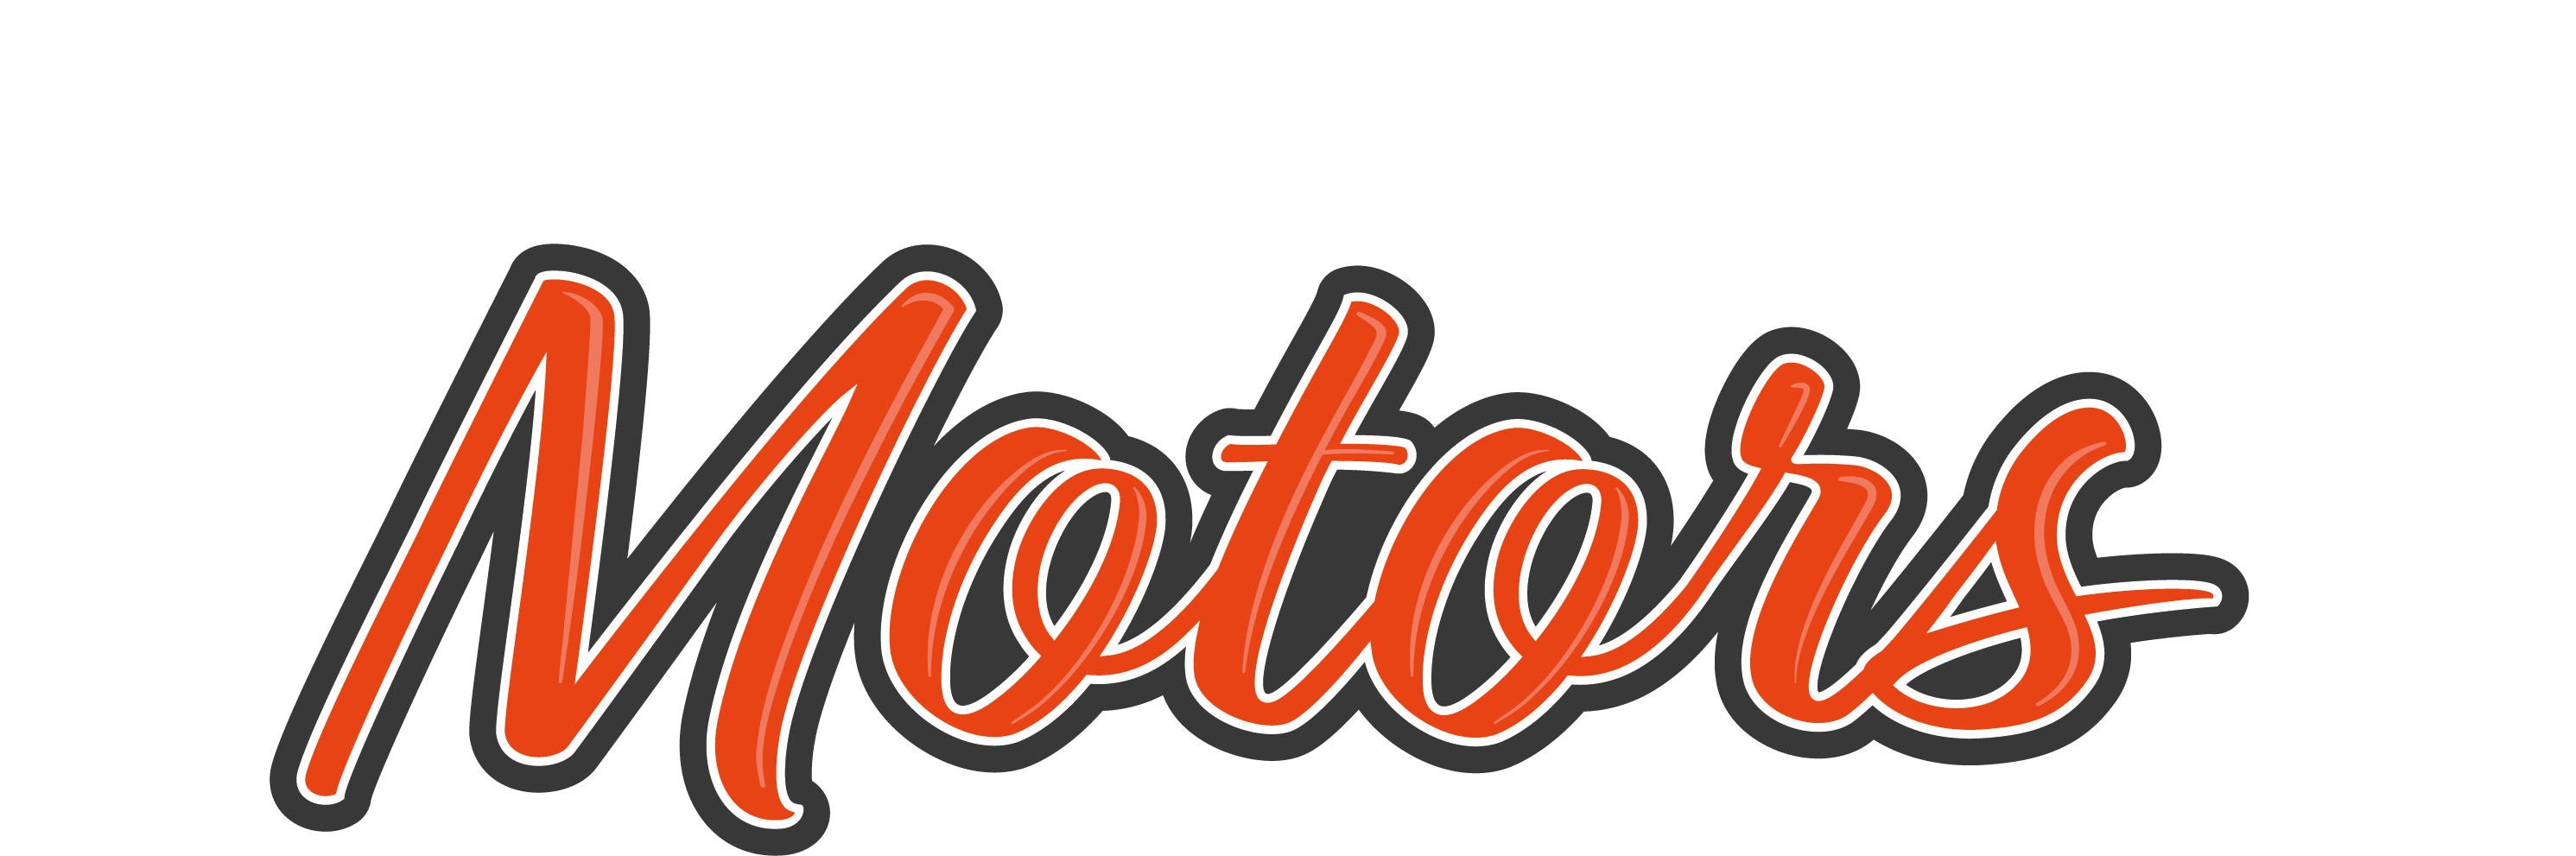 Race Hill Motors Logo - White Text